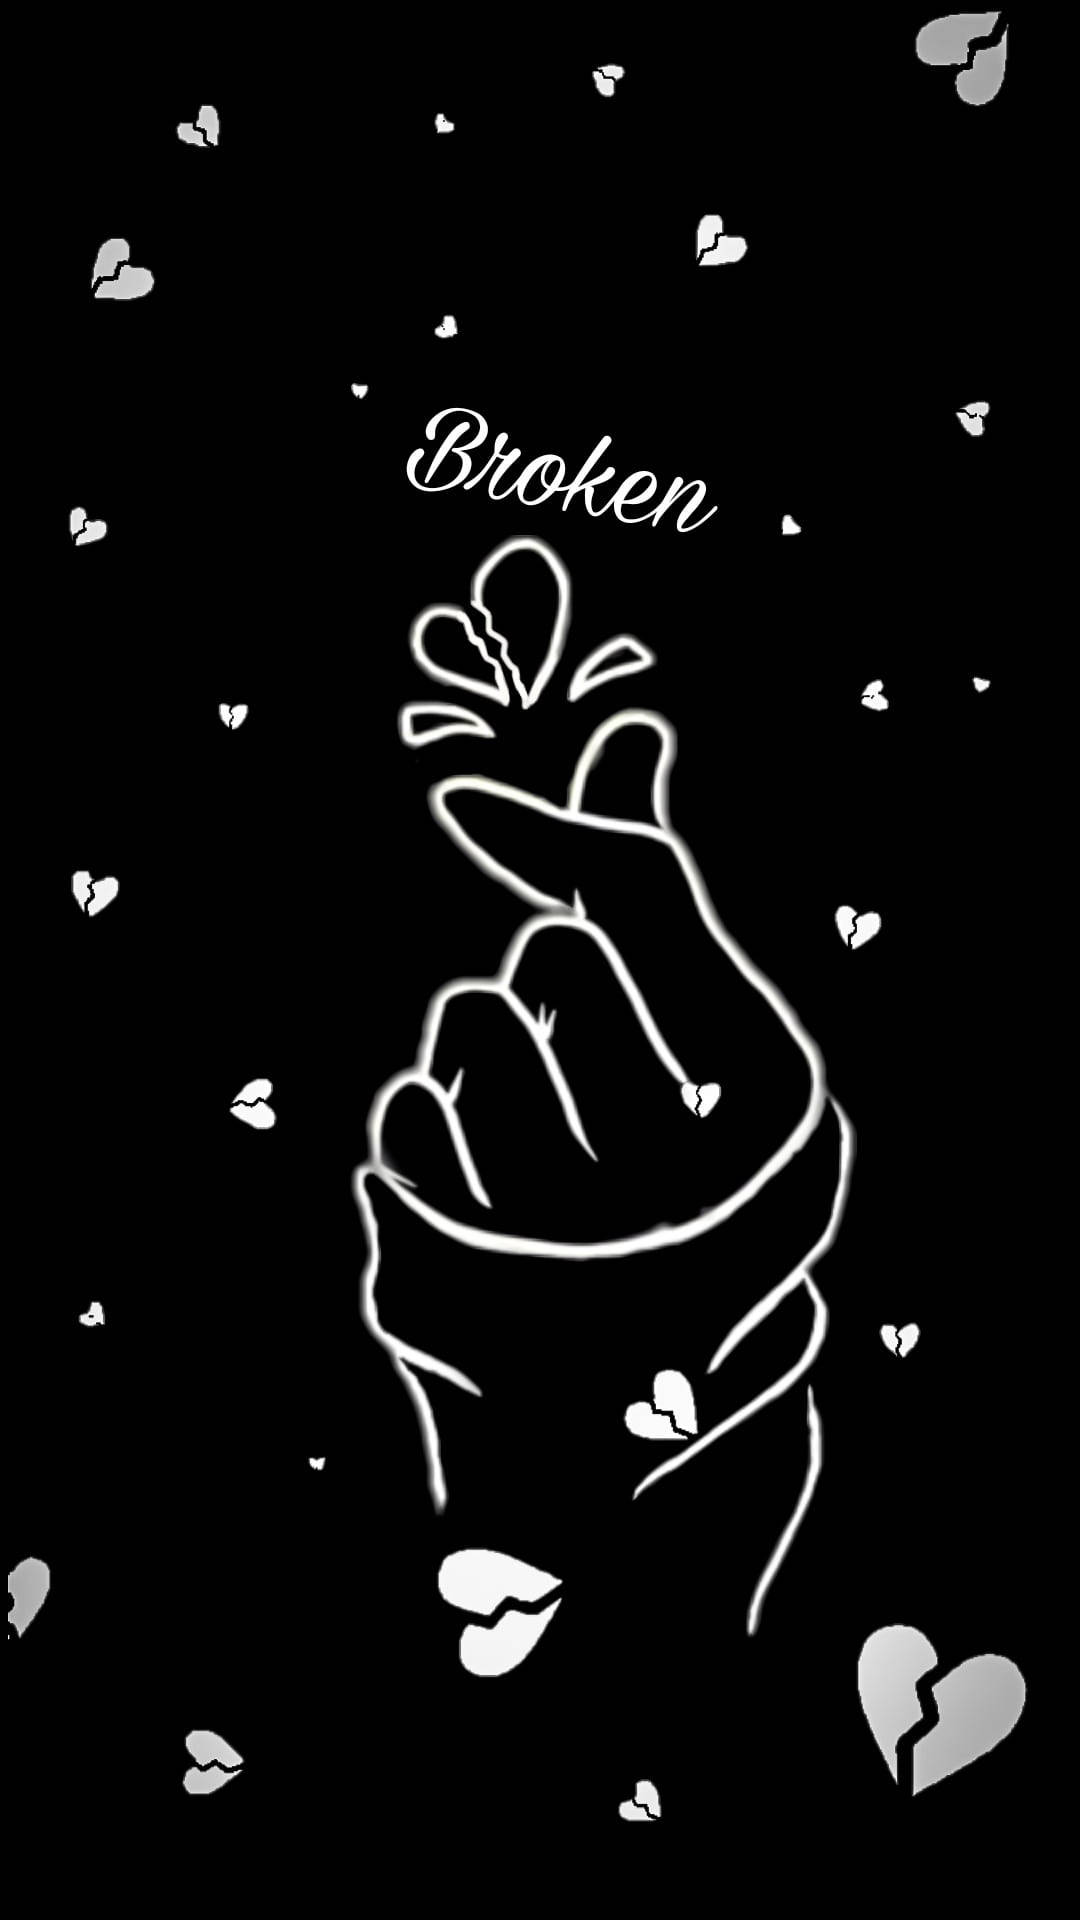 Korean Broken Heart Black Background